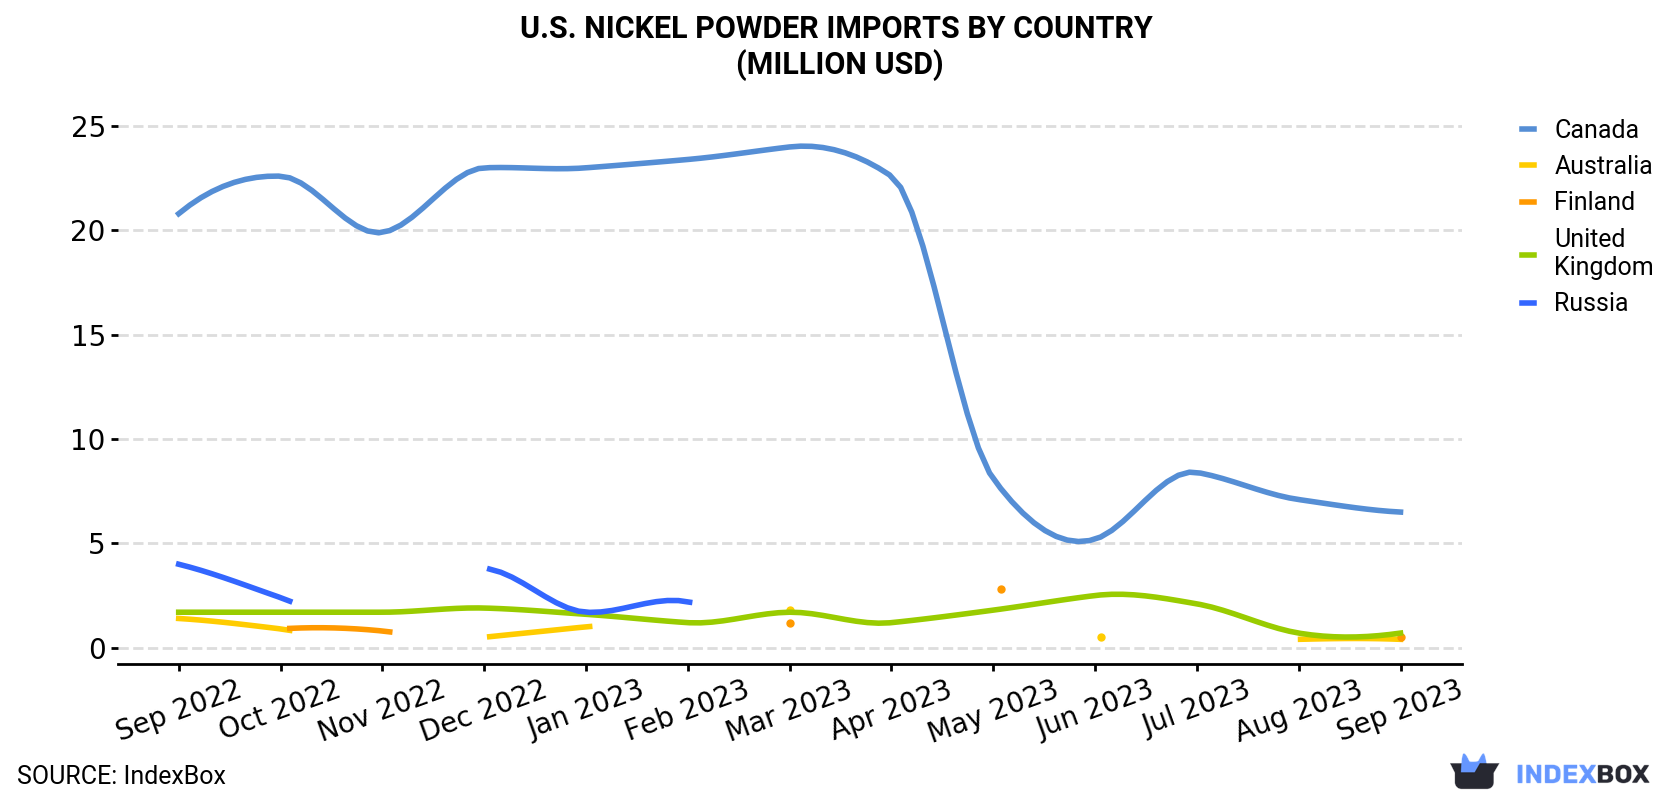 U.S. Nickel Powder Imports By Country (Million USD)